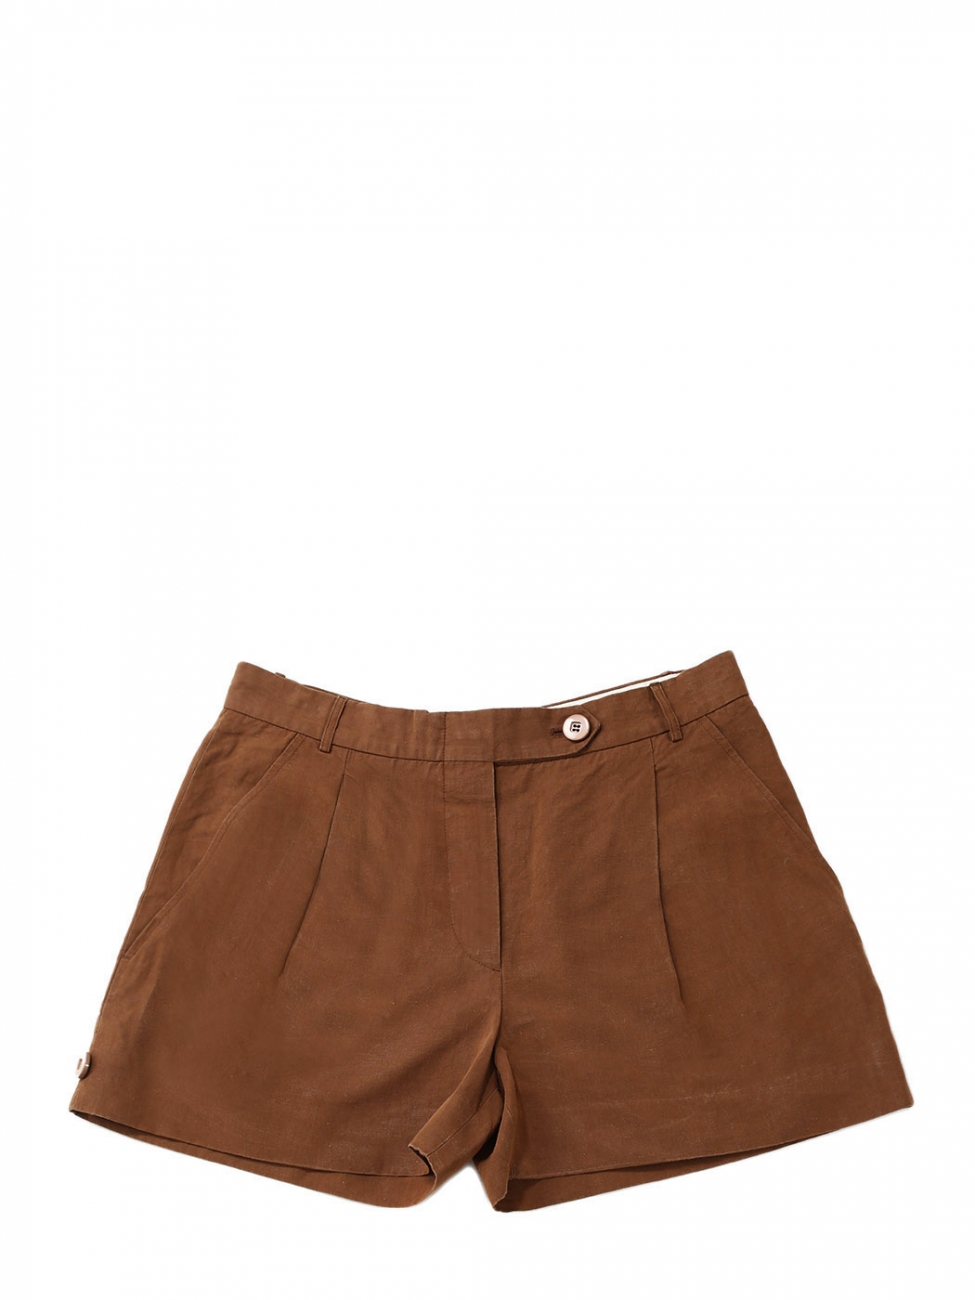 Boutique CHLOE Caramel brown linen shorts Retail price €300 Size M/L